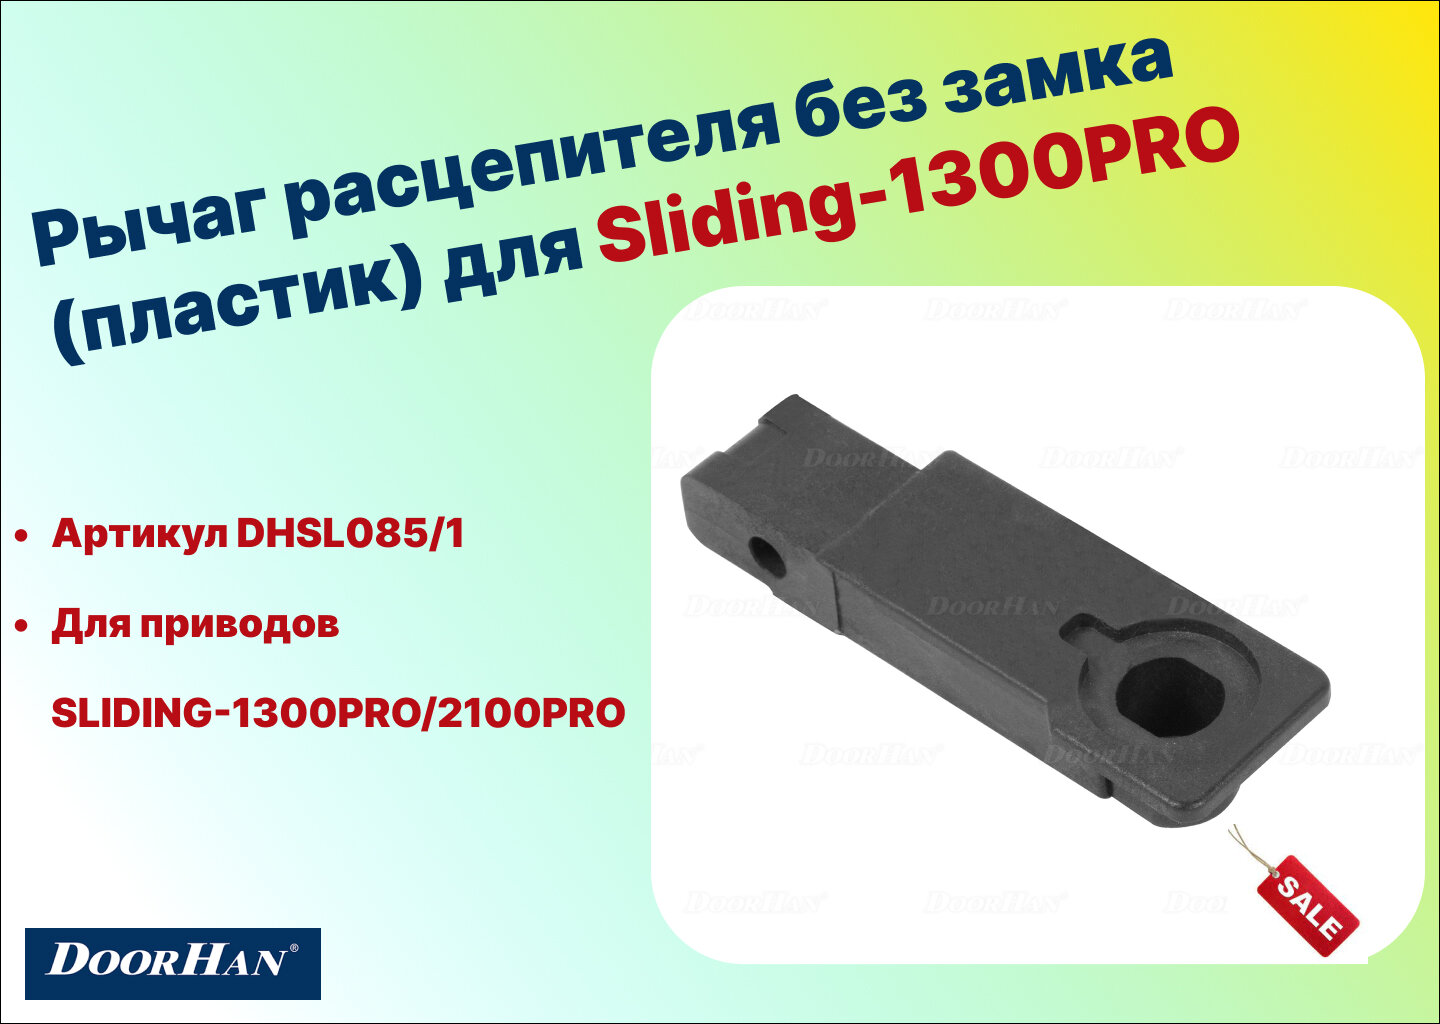 Рычаг расцепителя без замка (пластик) для Sliding-1300PRO DHSL085/1 (DoorHan)